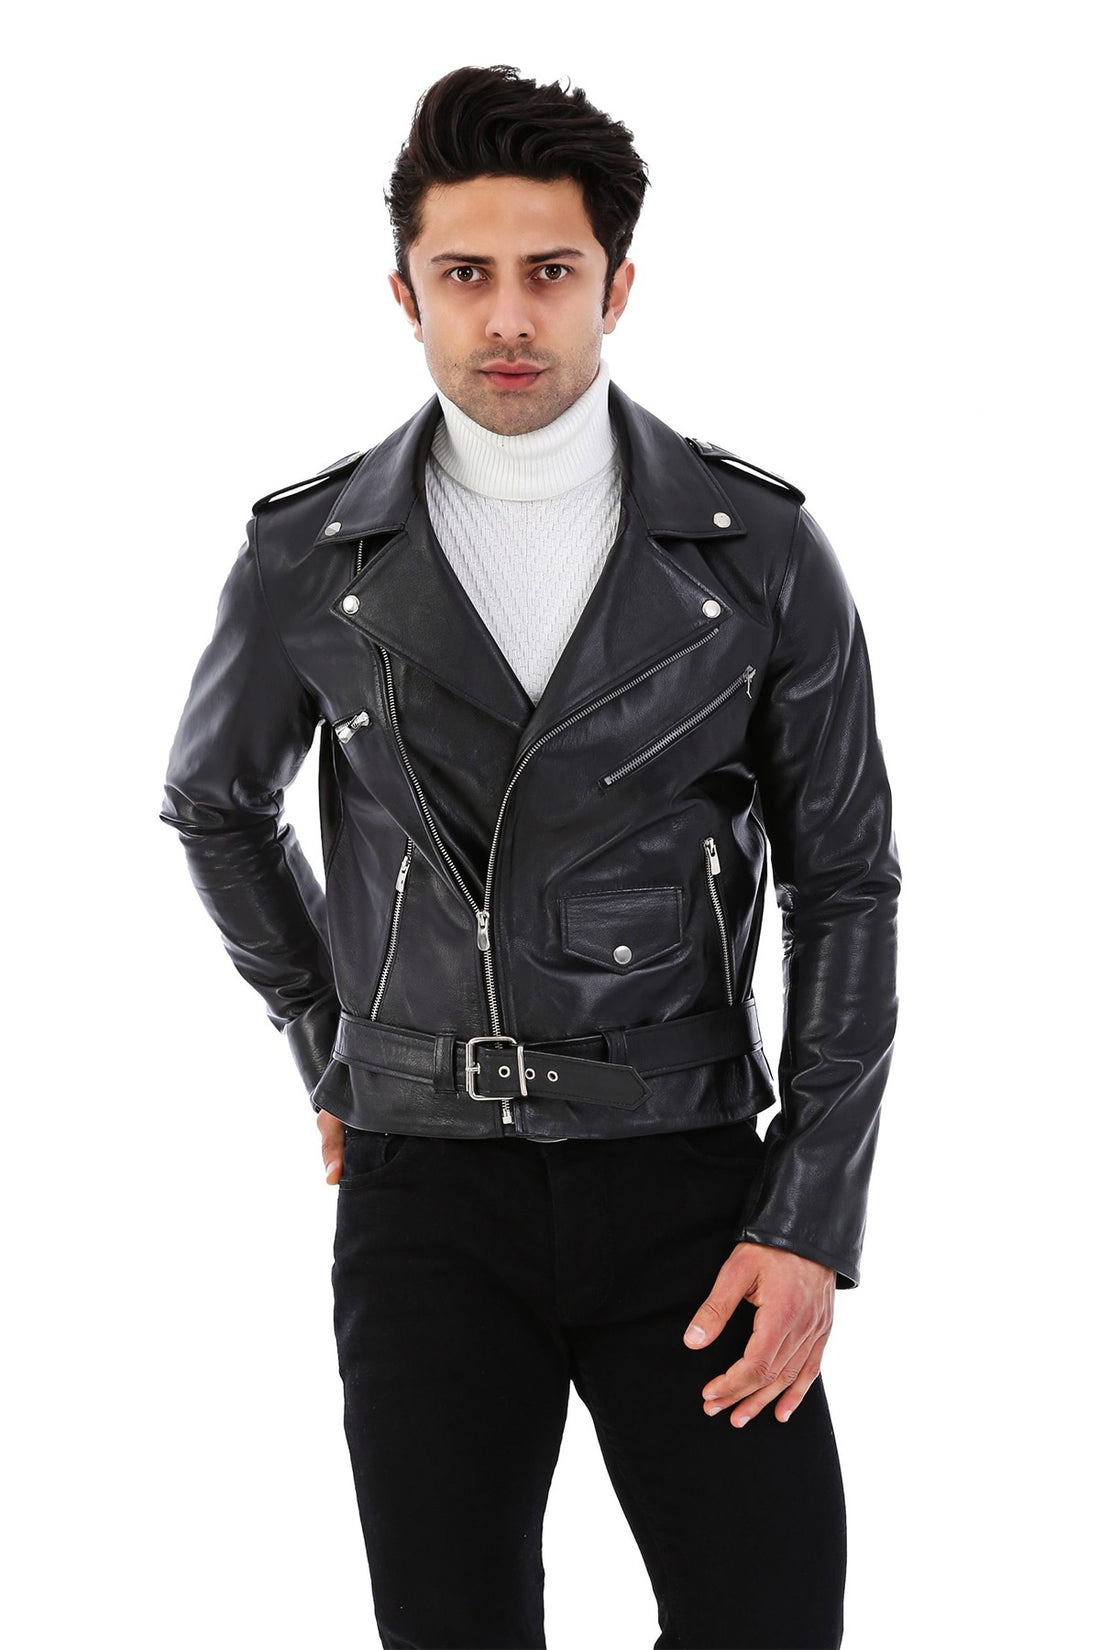 Biker Leather Jacket: A Timeless Fashion Staple